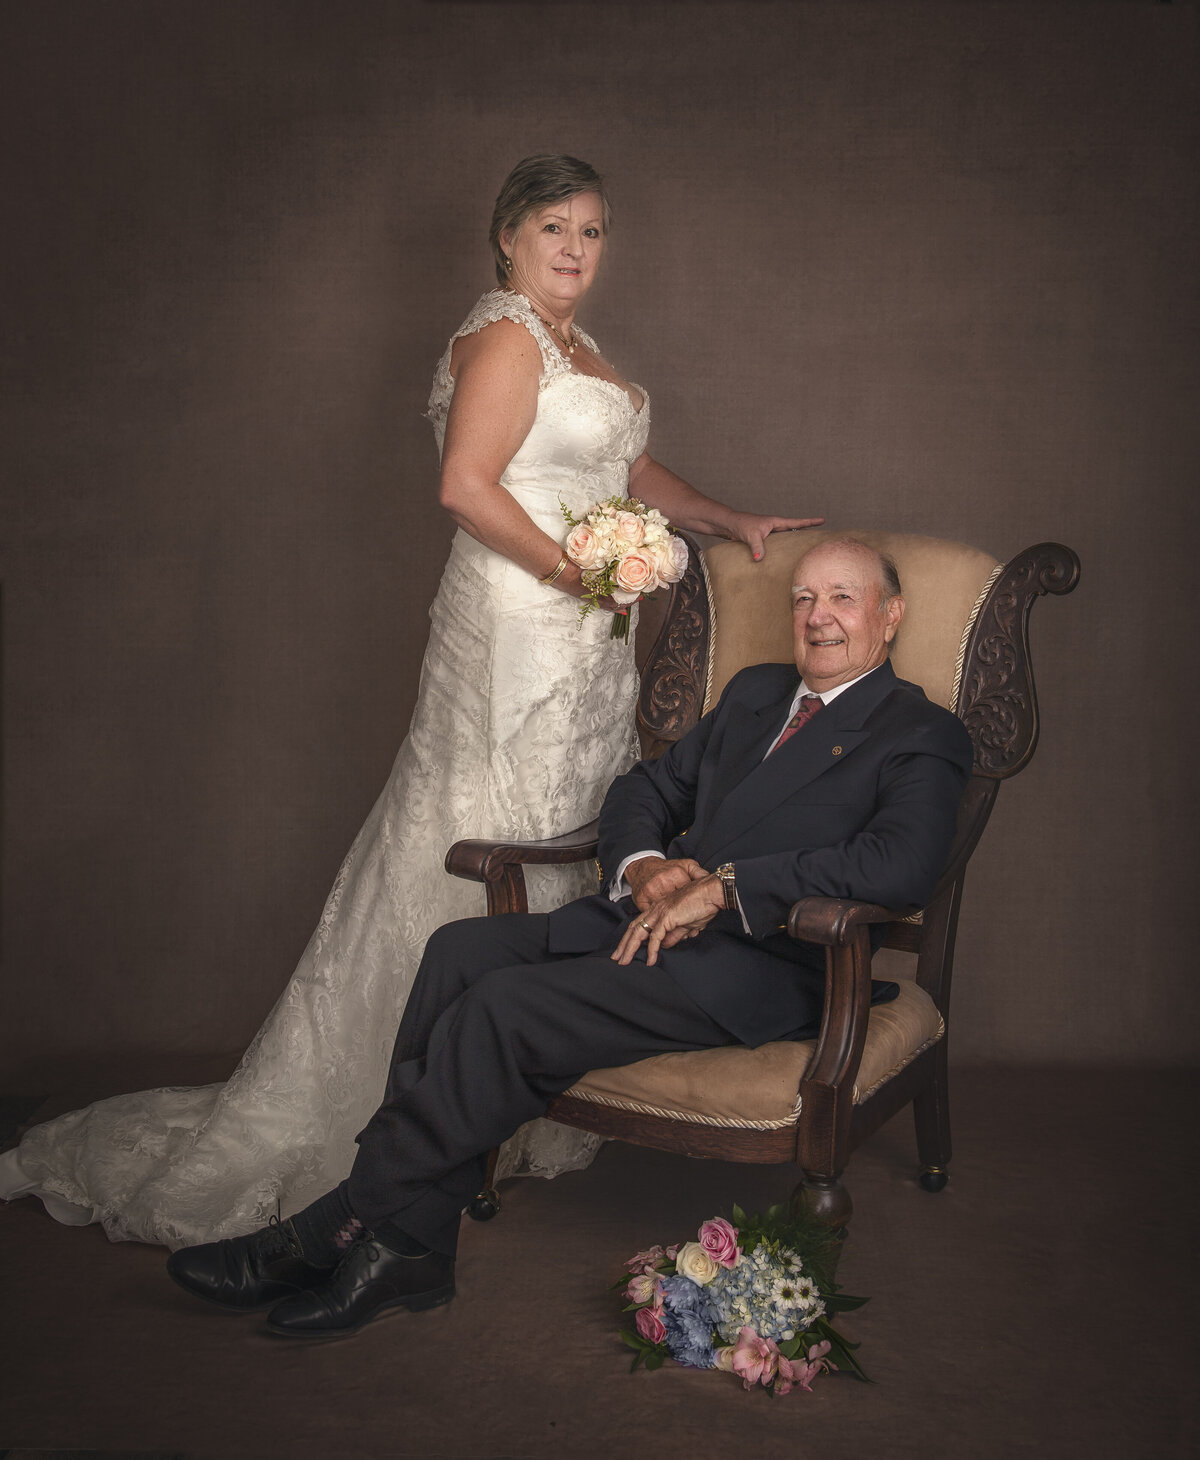 foraml couples wedding anniversary photo taken by Sonia Gourlie Fine art photogra[phy in Ottawa  Ontario